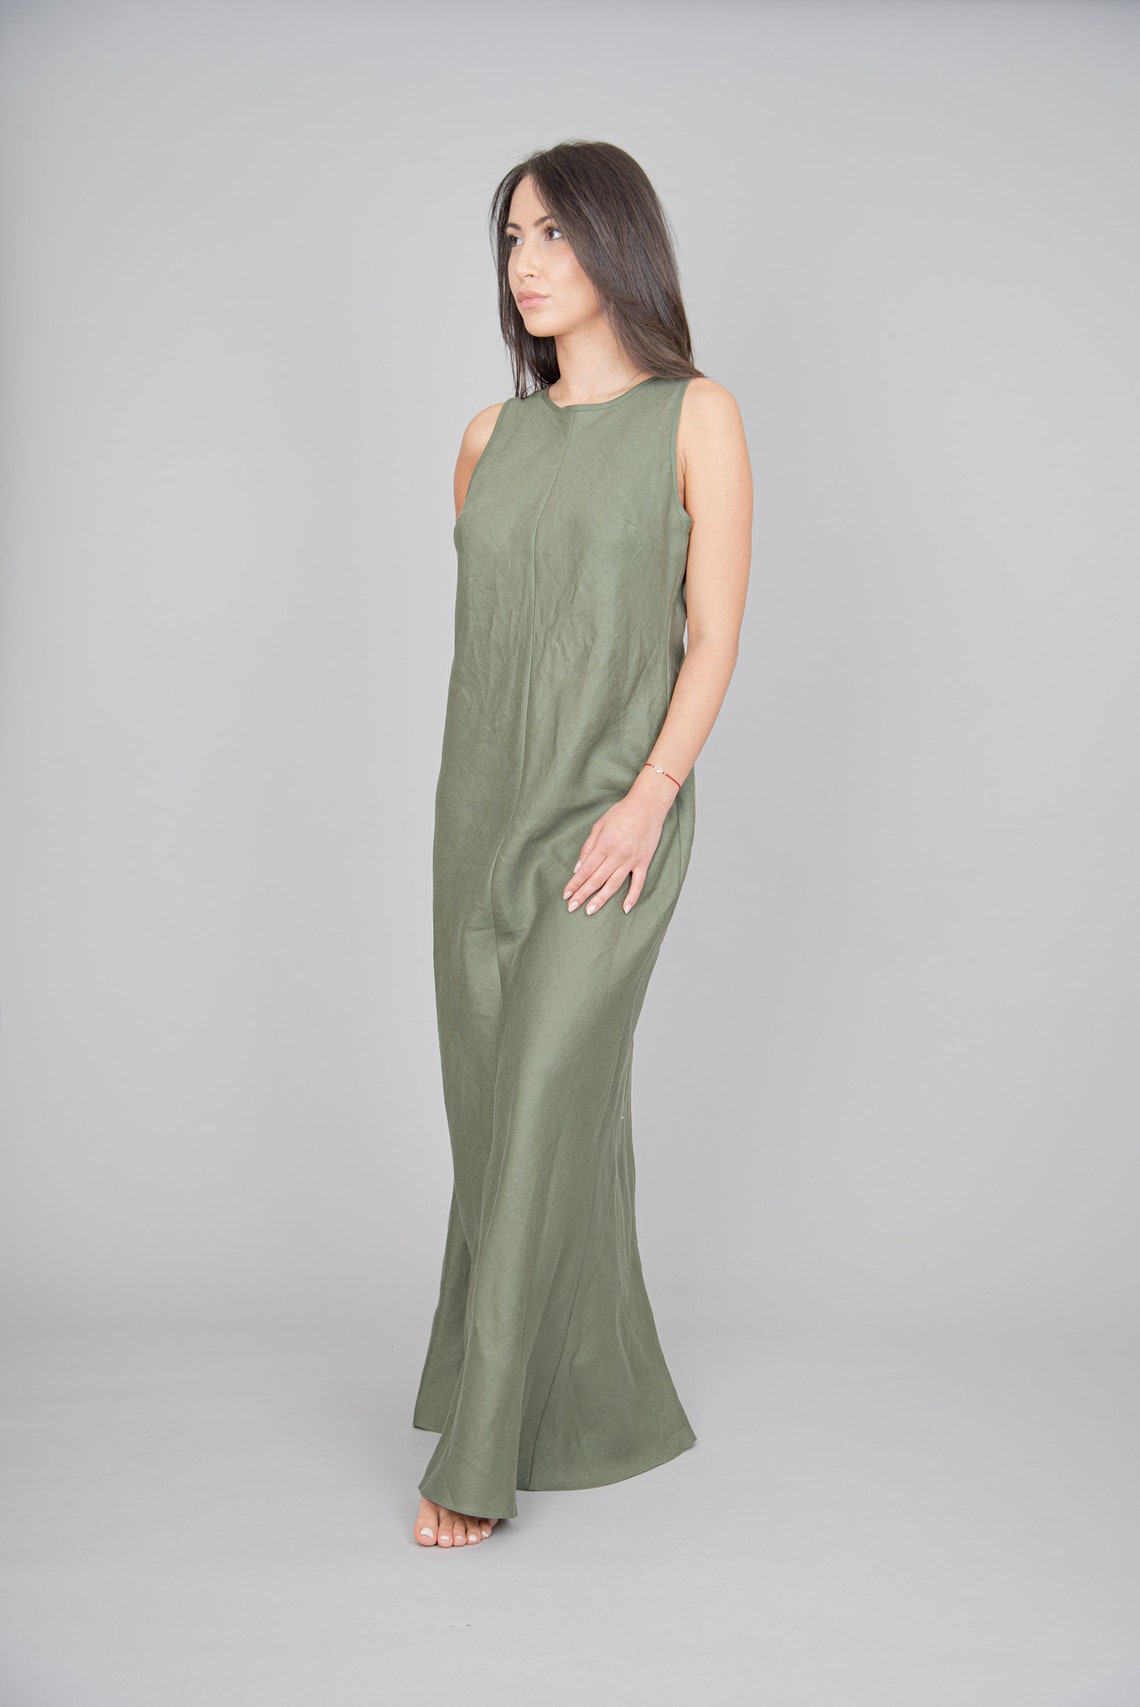 Olive Green Long Linen Dress/Sleeveless Dress/Linen Dress with | Etsy